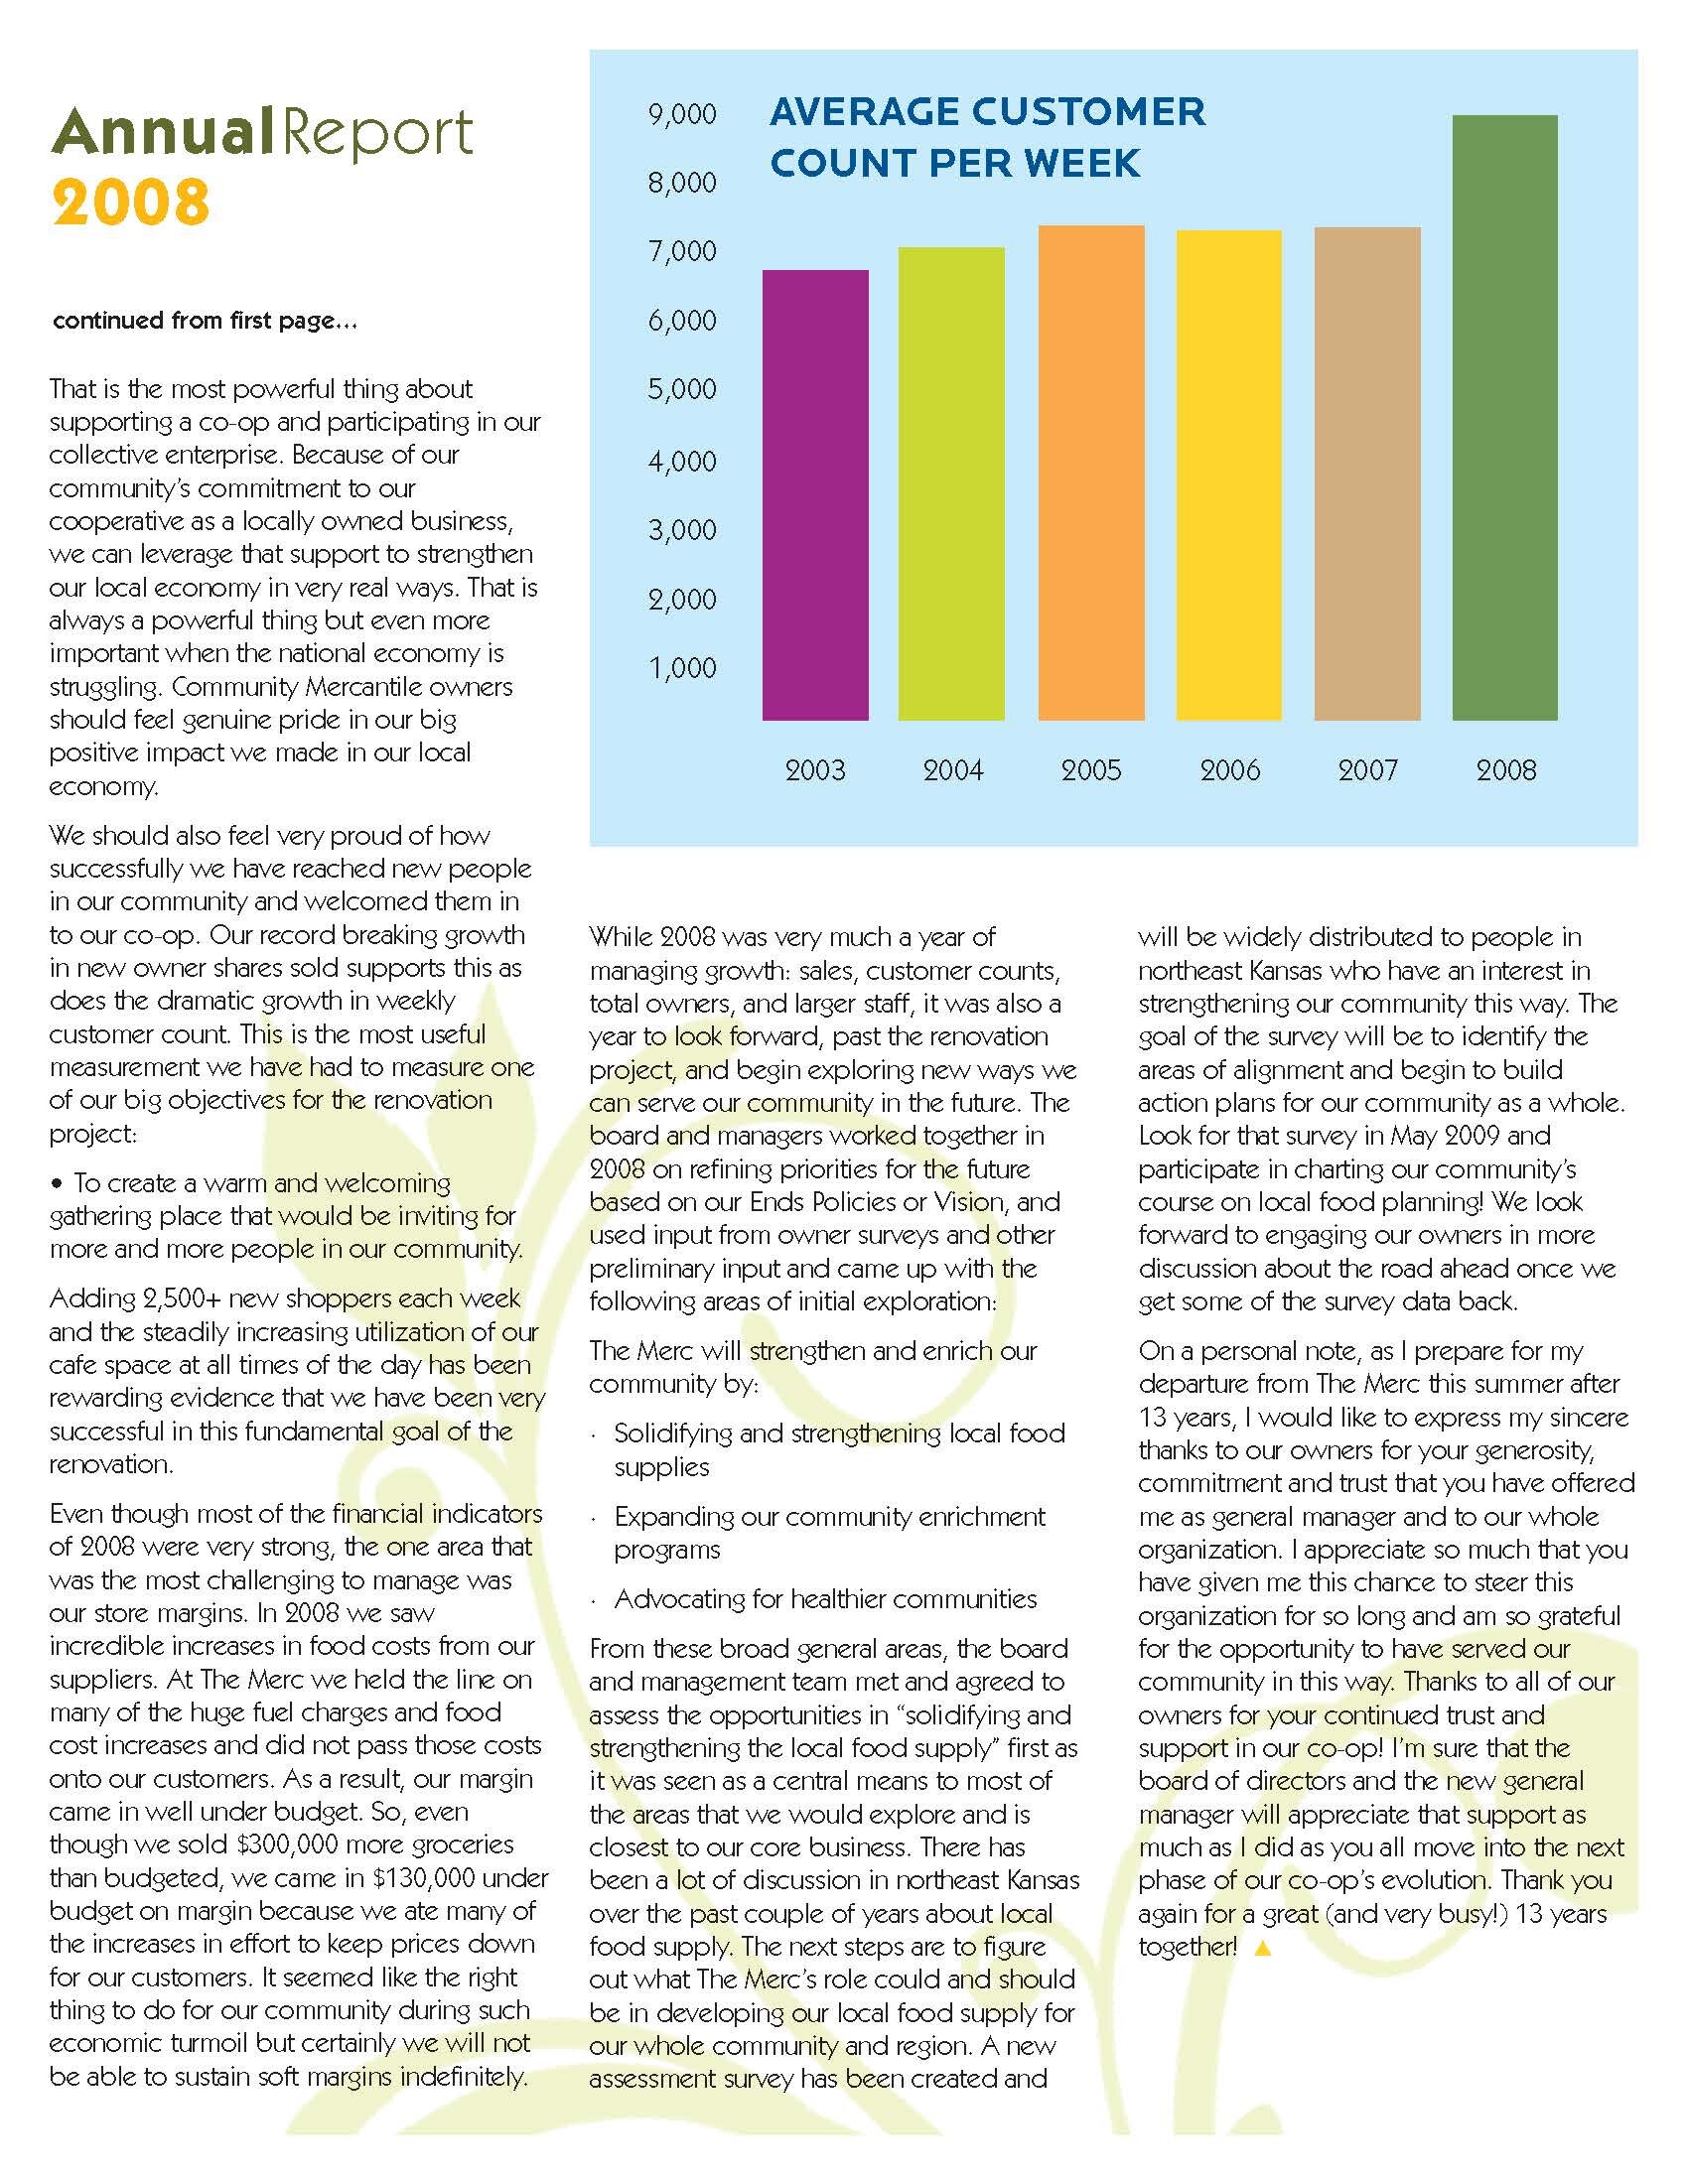 2008 Merc Annual Report_Page_2.jpg